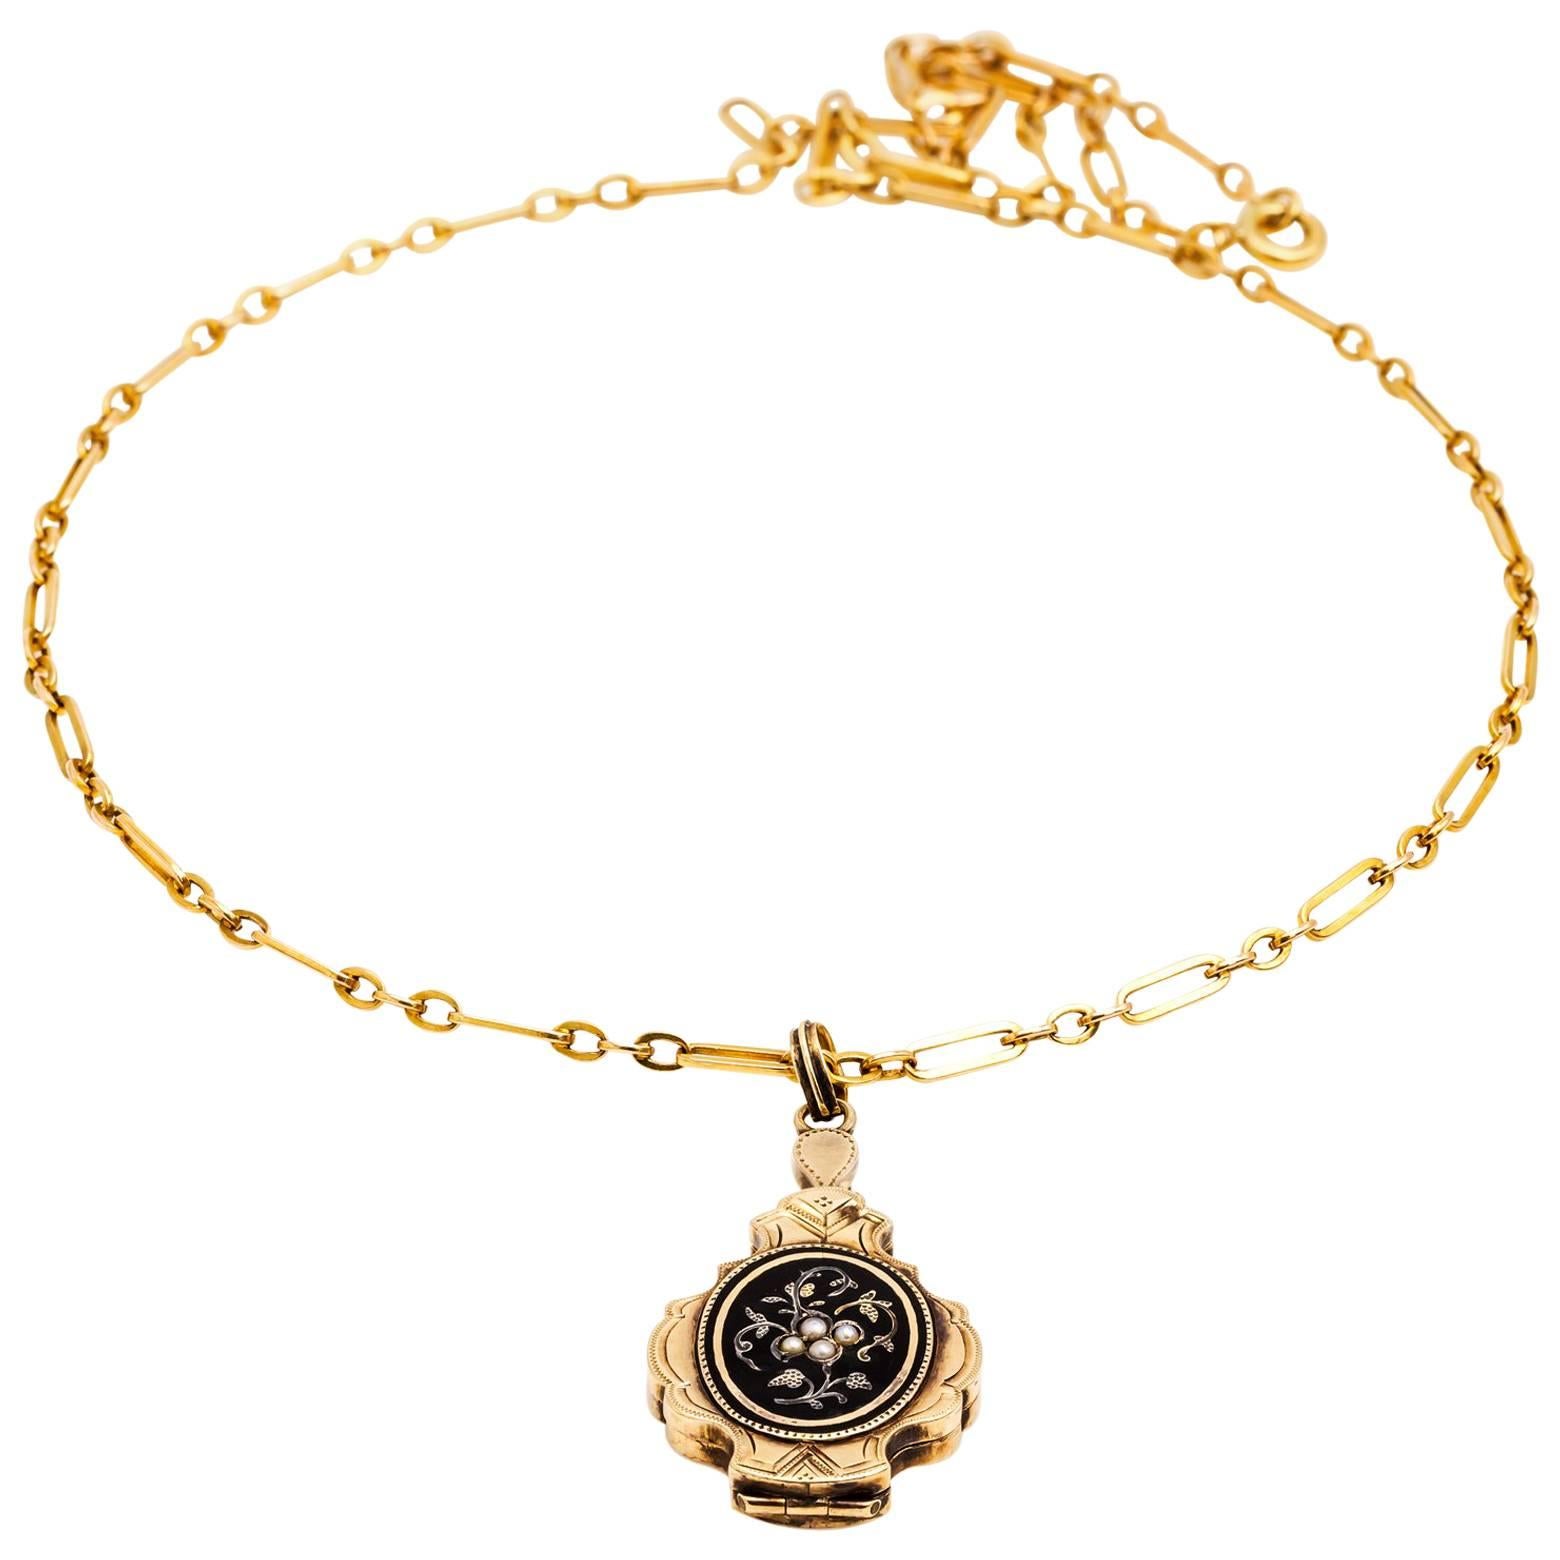 Antique Black Enamel, Pearl and Gold Locket in a Floral Design